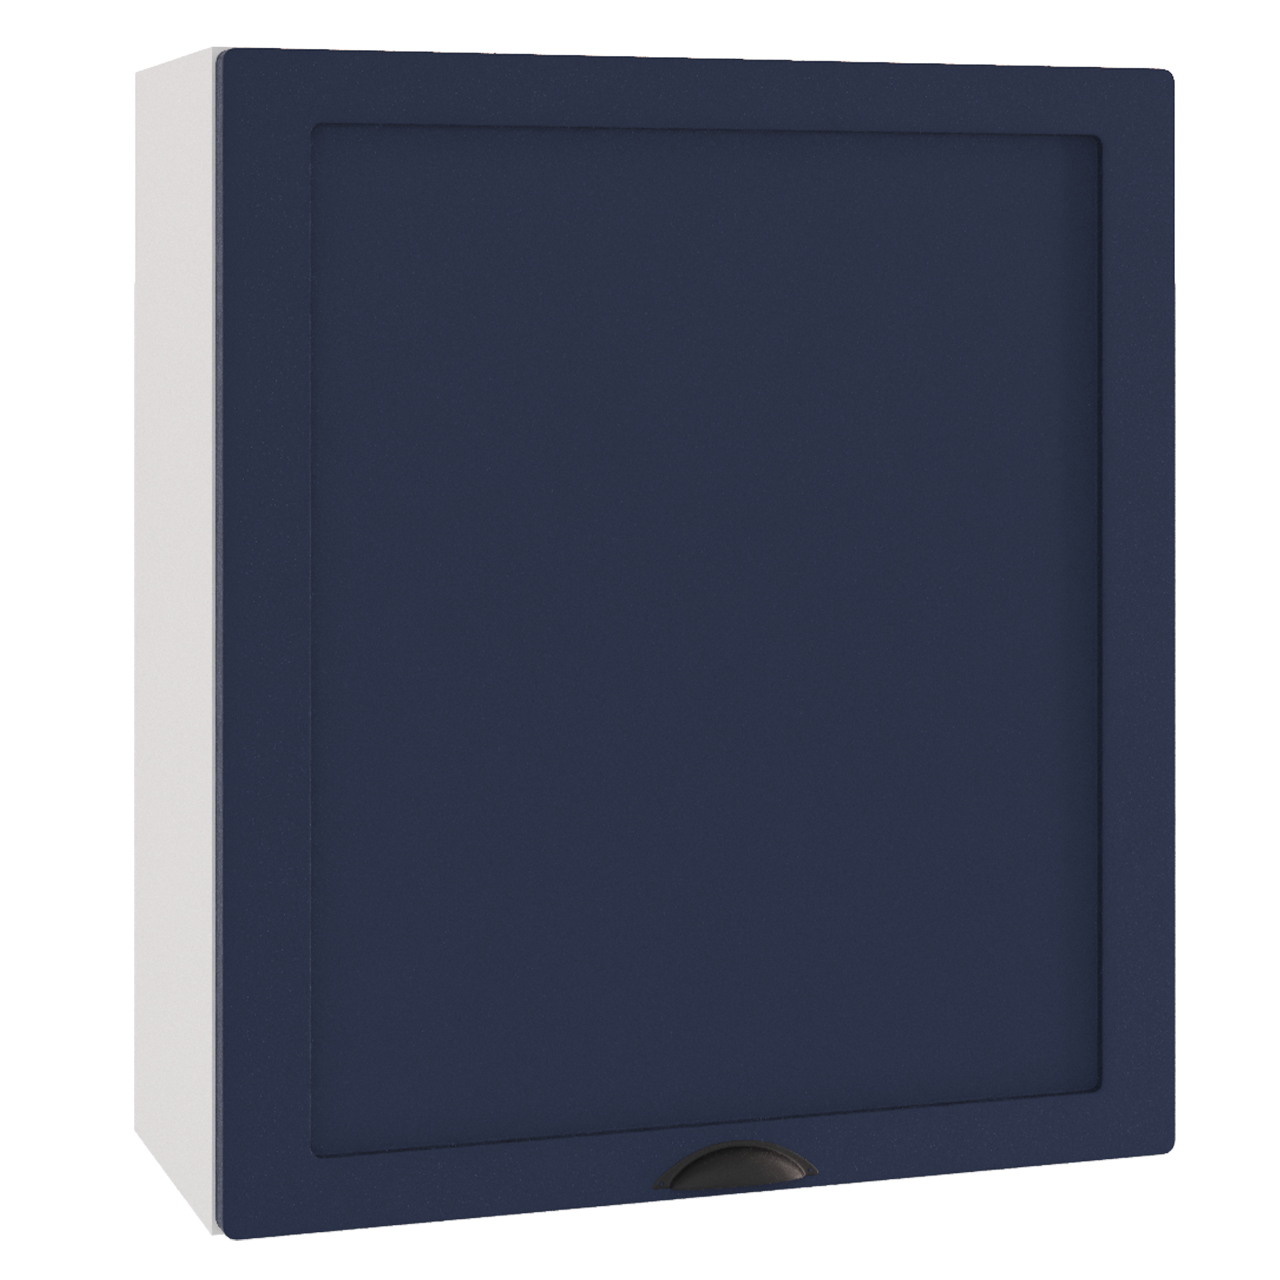 Závěsná skříňka s okapem ADELE W60/68 SLIM P/L námořnická modrá